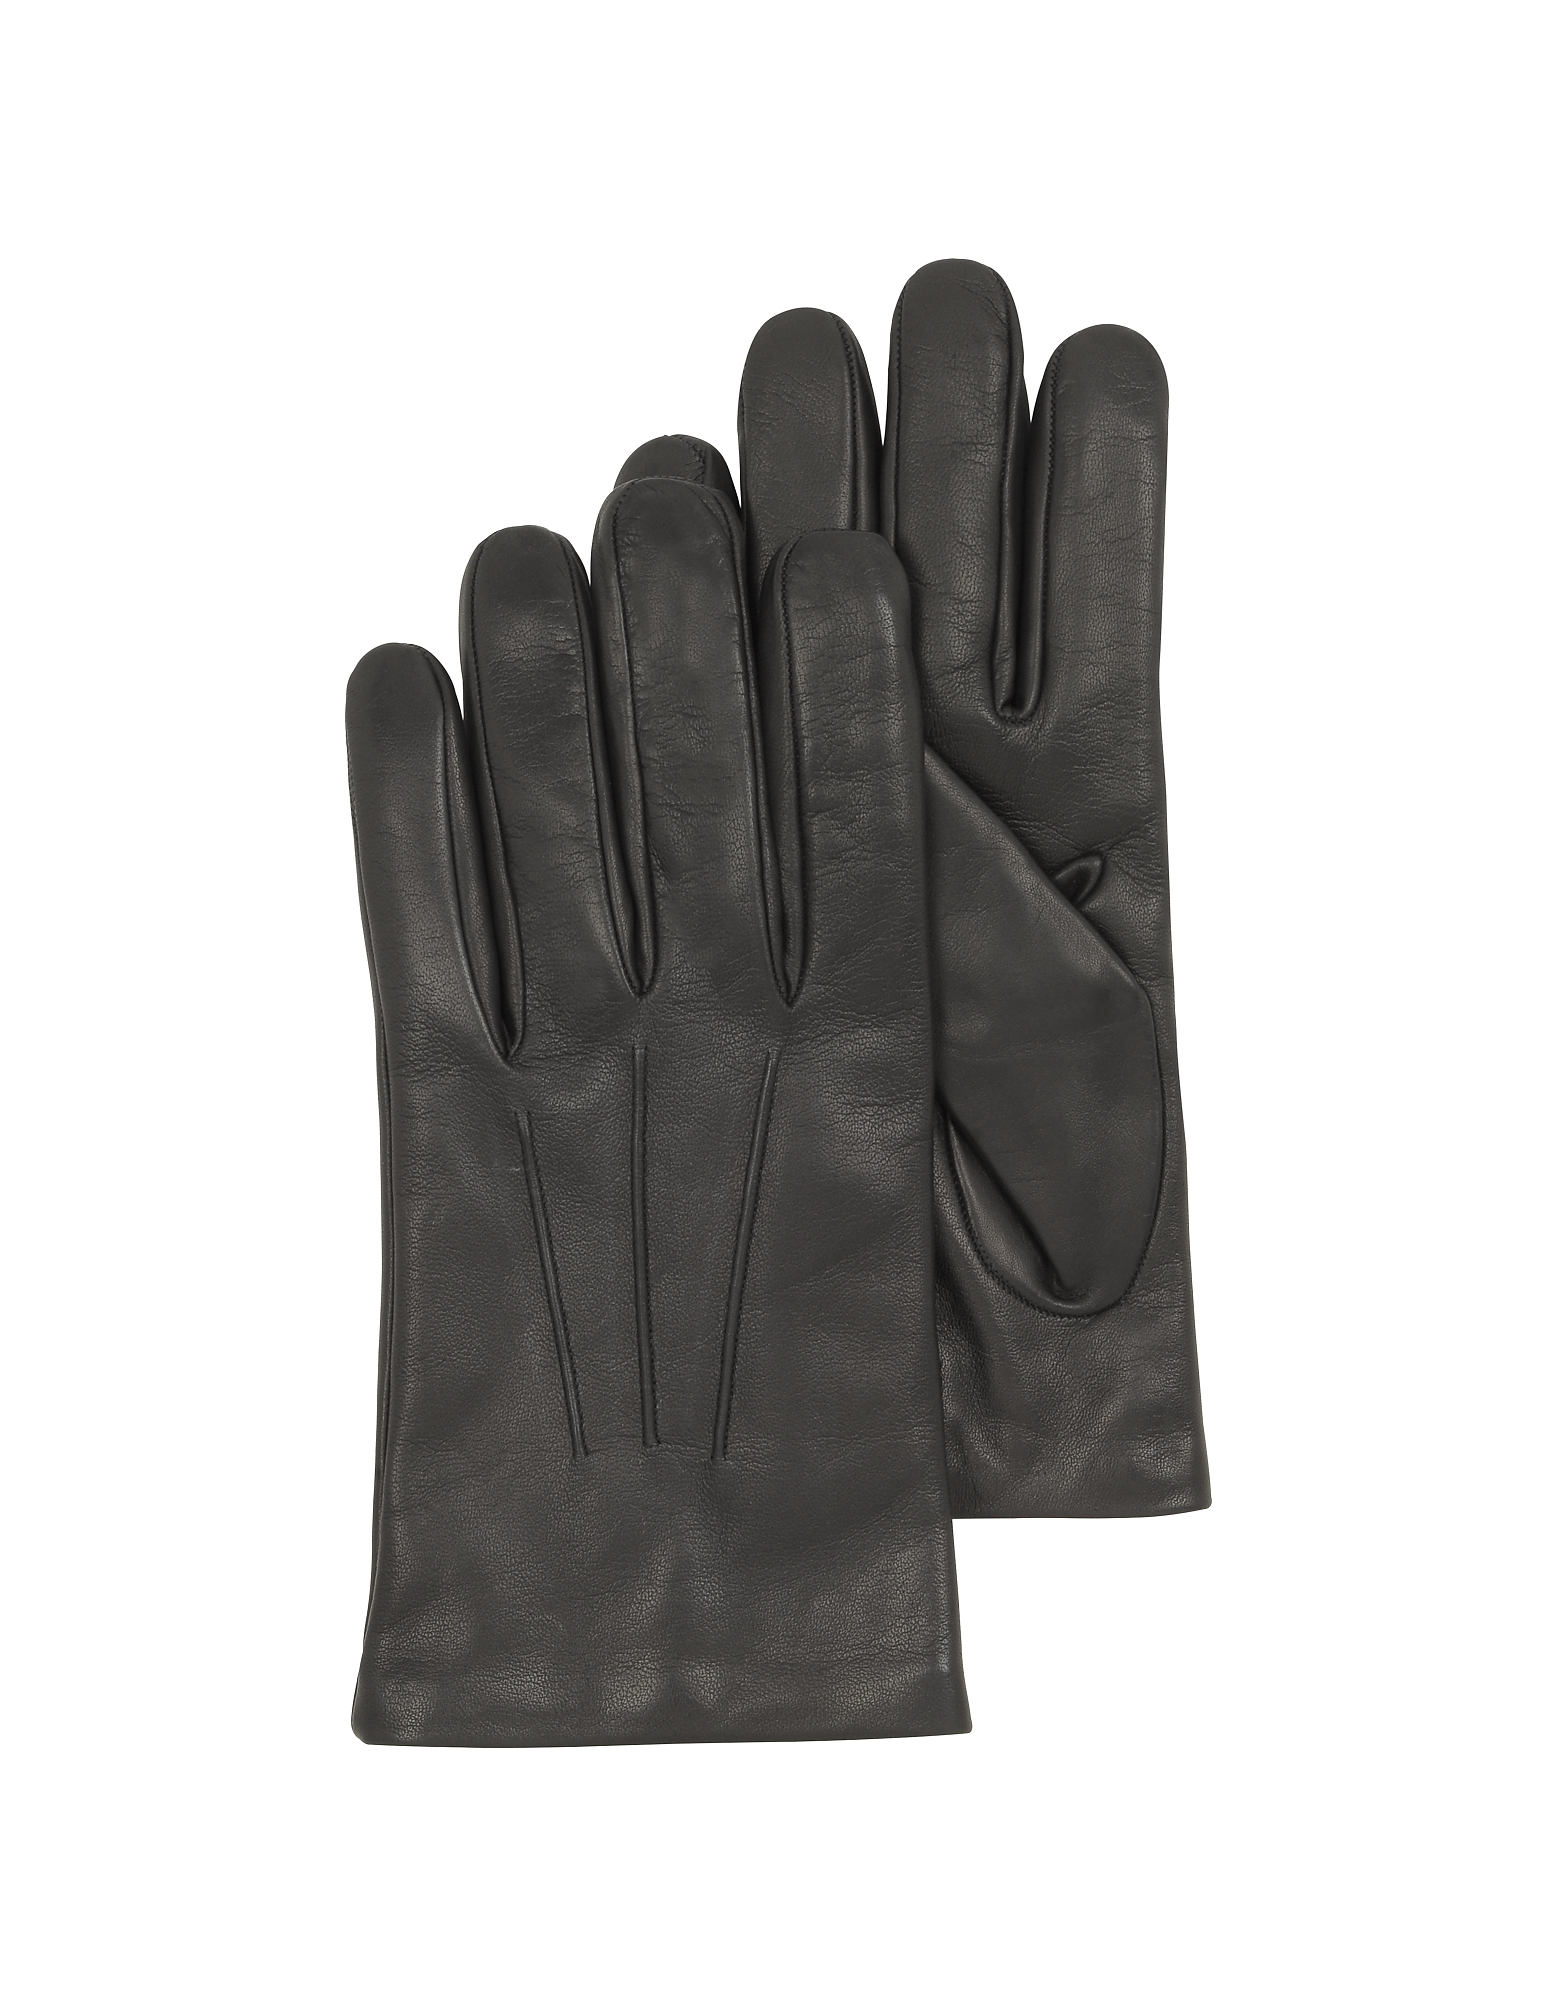 Forzieri Men's Gloves Black Leather Handmade Men's Gloves w/Wool Lining